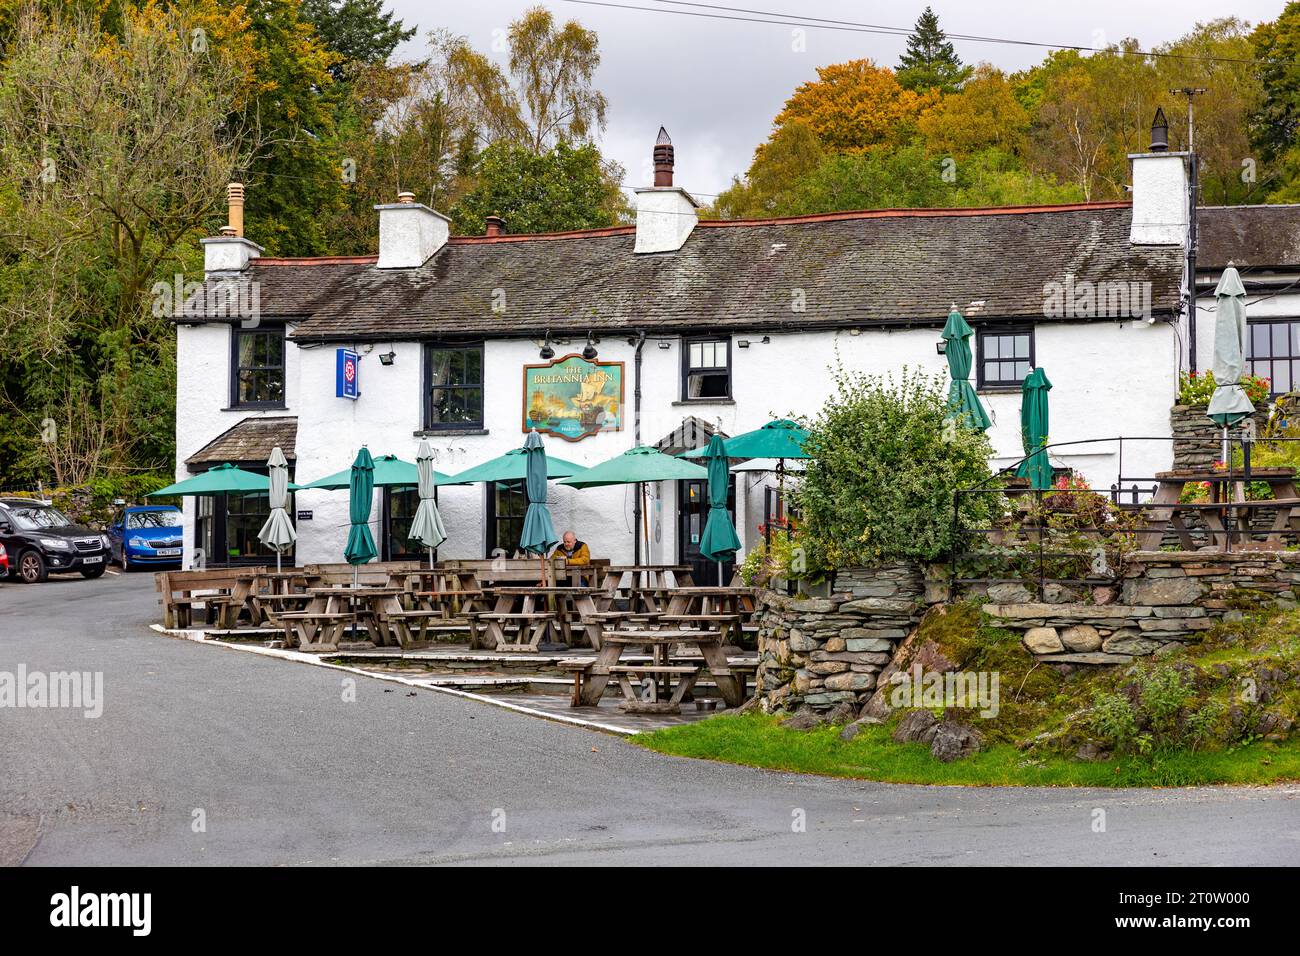 Elterwater Lake District national park, The Britannia Inn public house pub and accommodation,Cumbria,England,UK Stock Photo